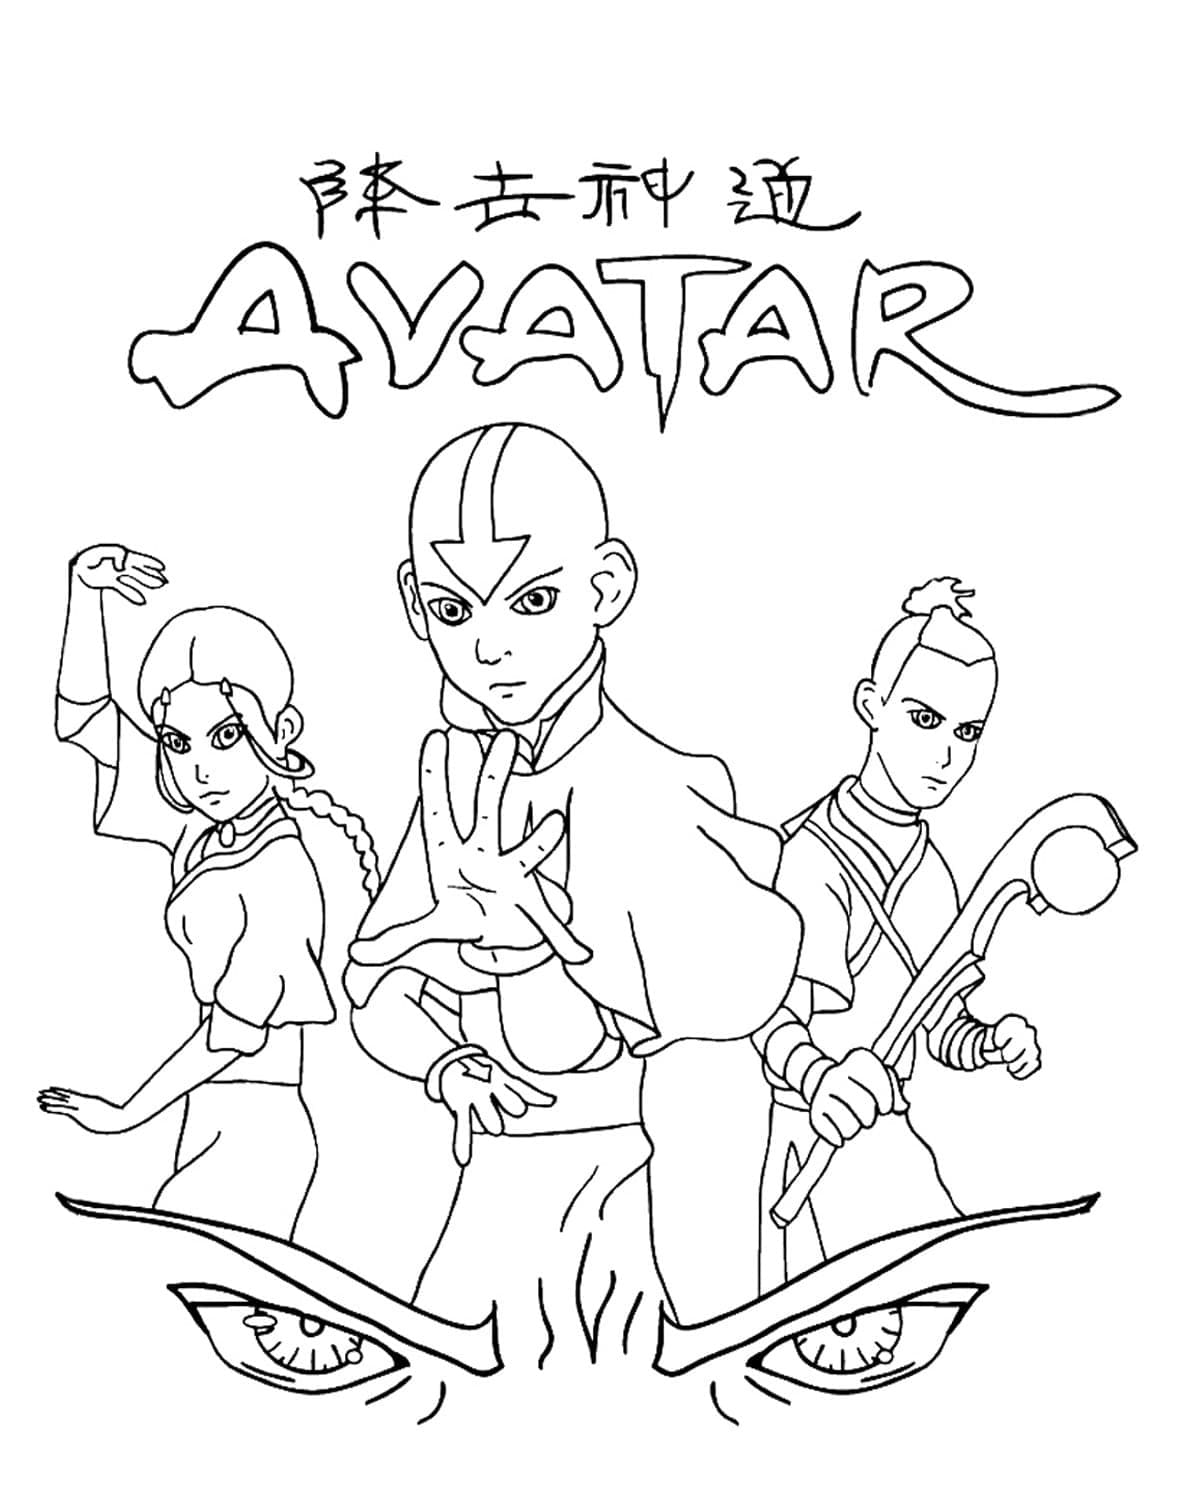 Katara, Aang et Sokka coloring page